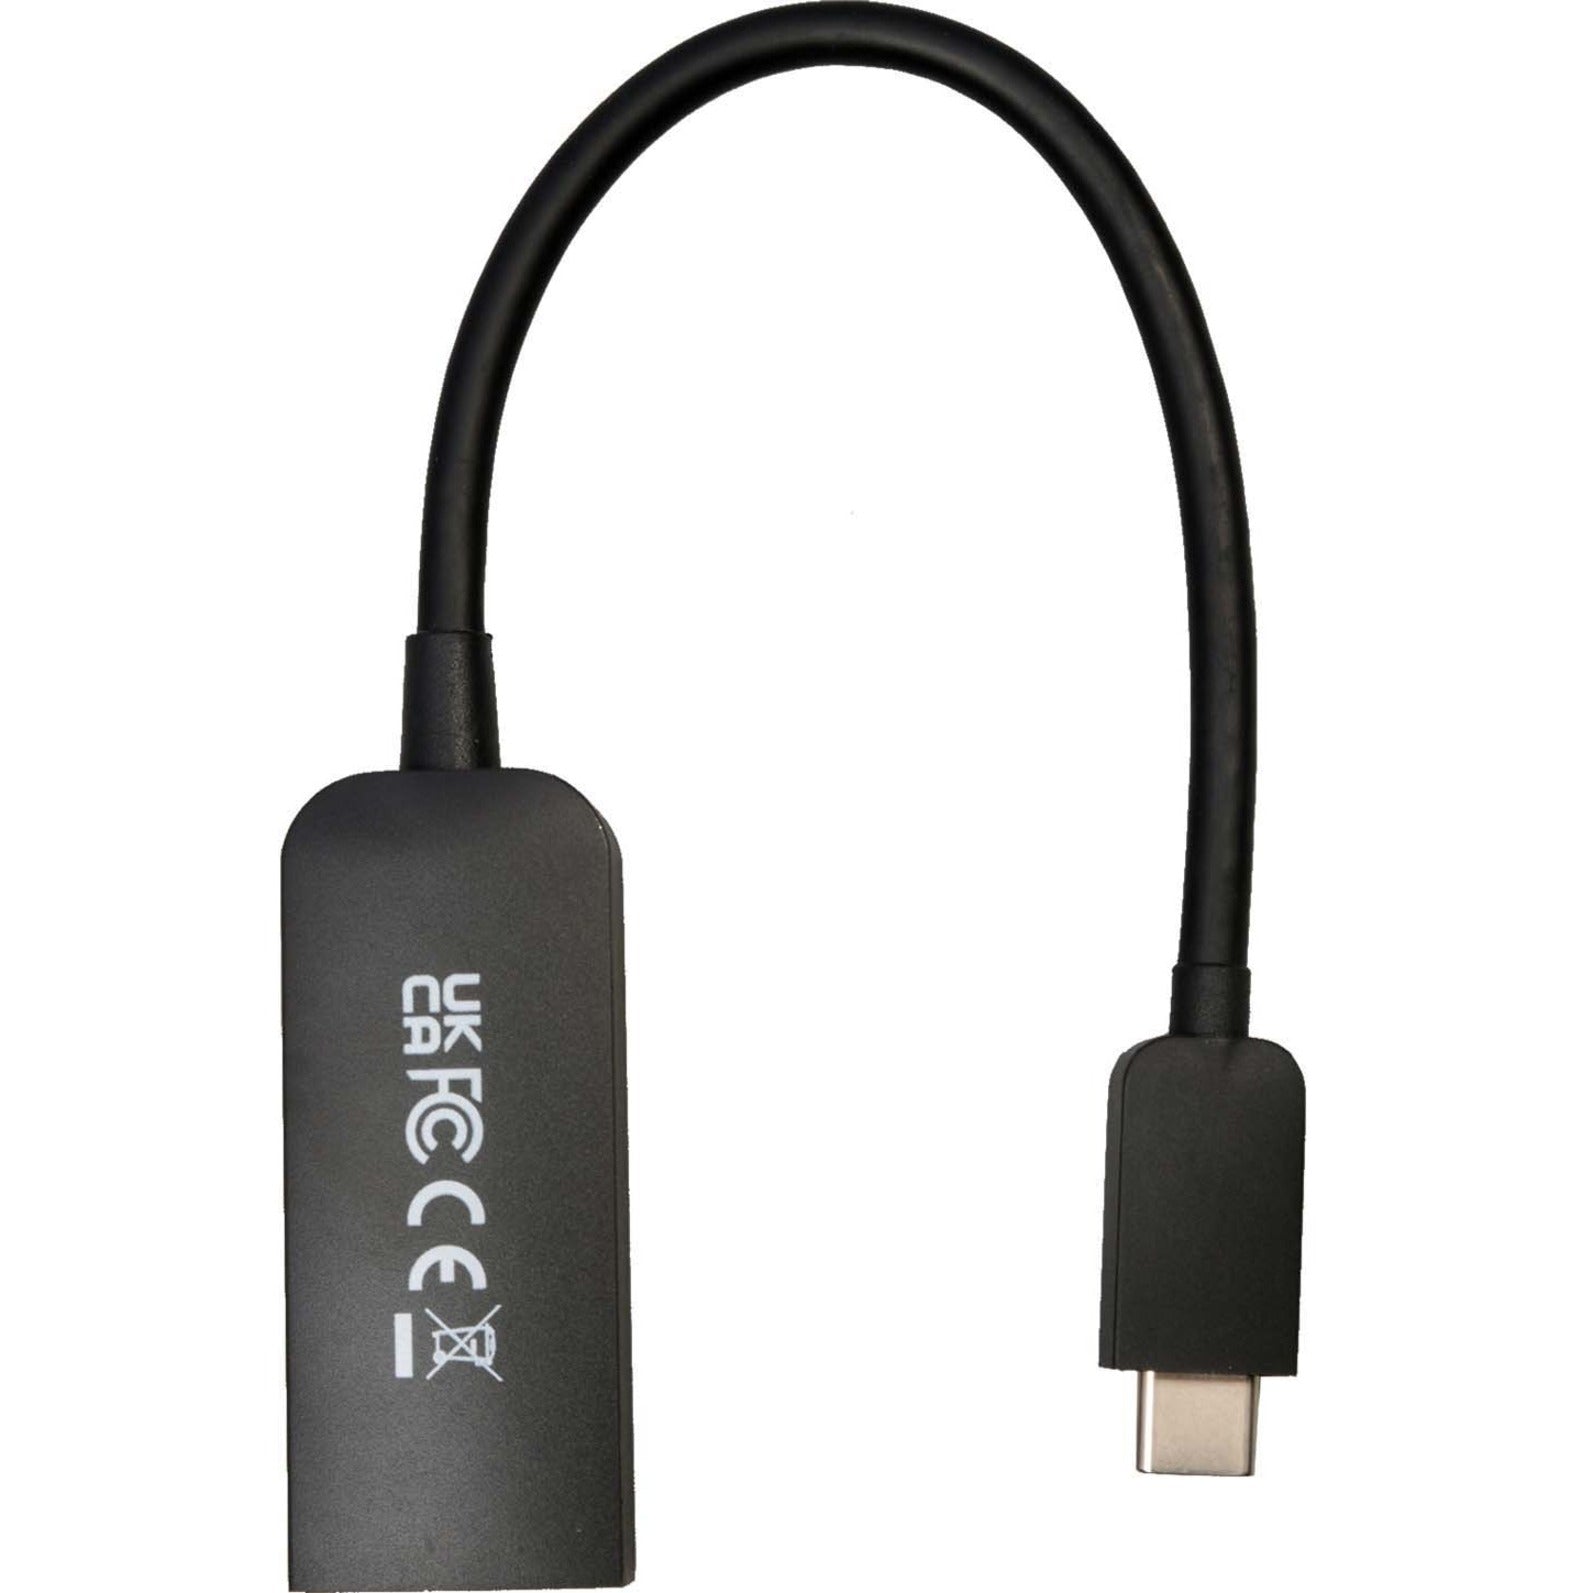 V7 V7USBCDP14 USB-C Male to DisplayPort 1.4 Female 8K/4K UHD Cable, 32.4 Gbps, Strain Relief